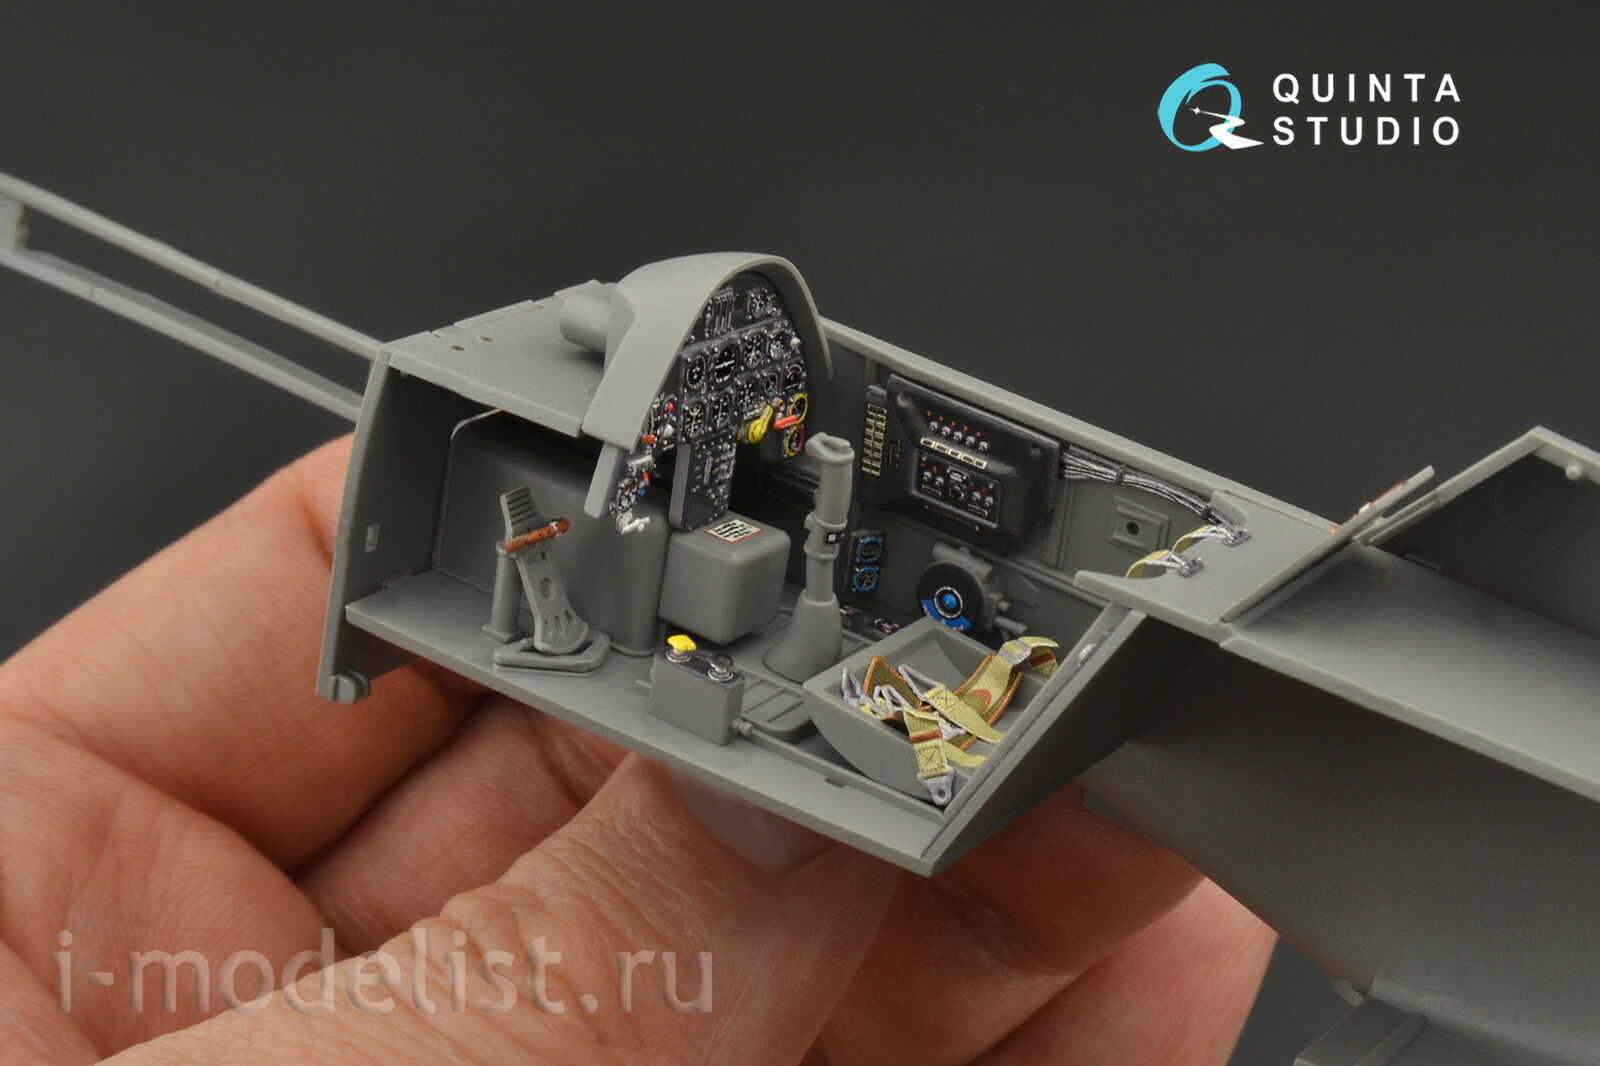 QD35041 Quinta Studio 1/35 3D Cabin Interior Decal Bf 109G-6 (for Border Model)